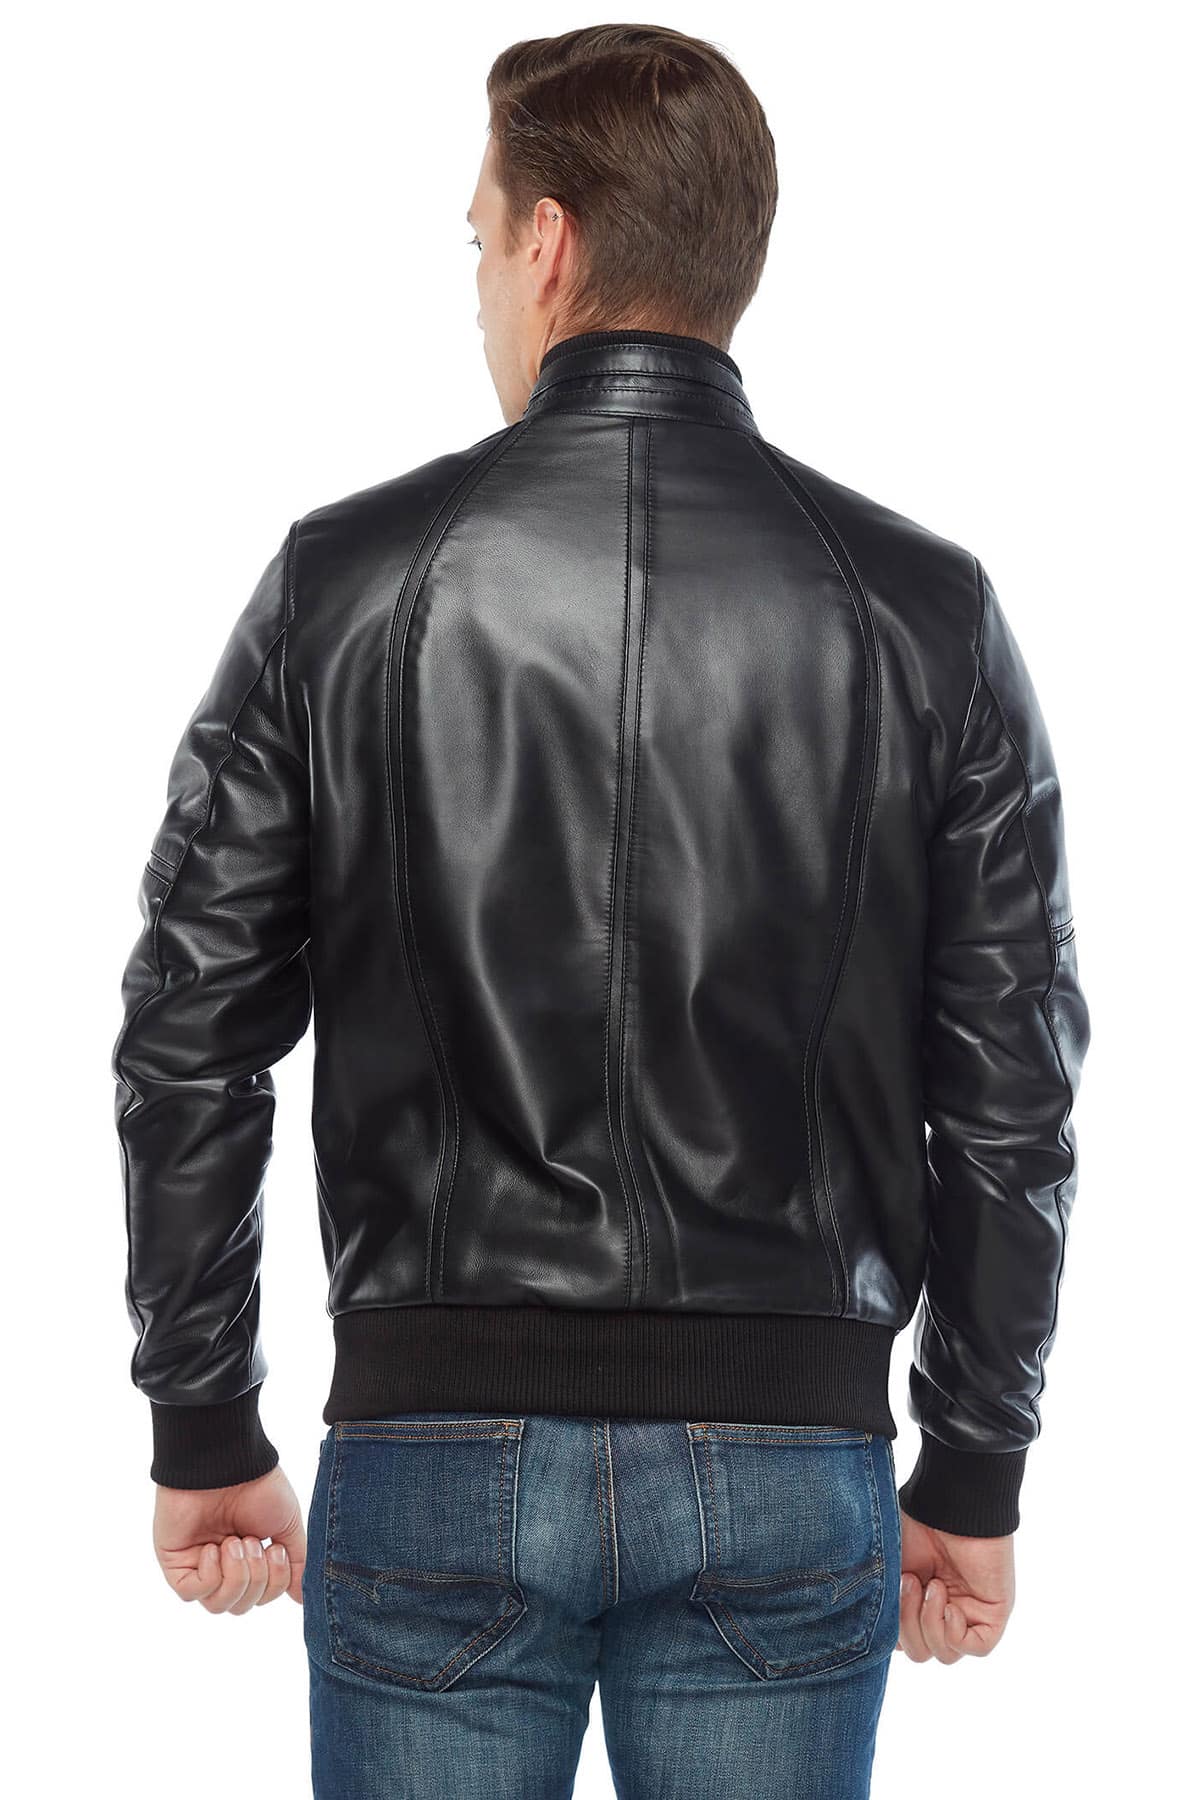 George Craig Men's 100 % Real Black Leather Bomber Jacket